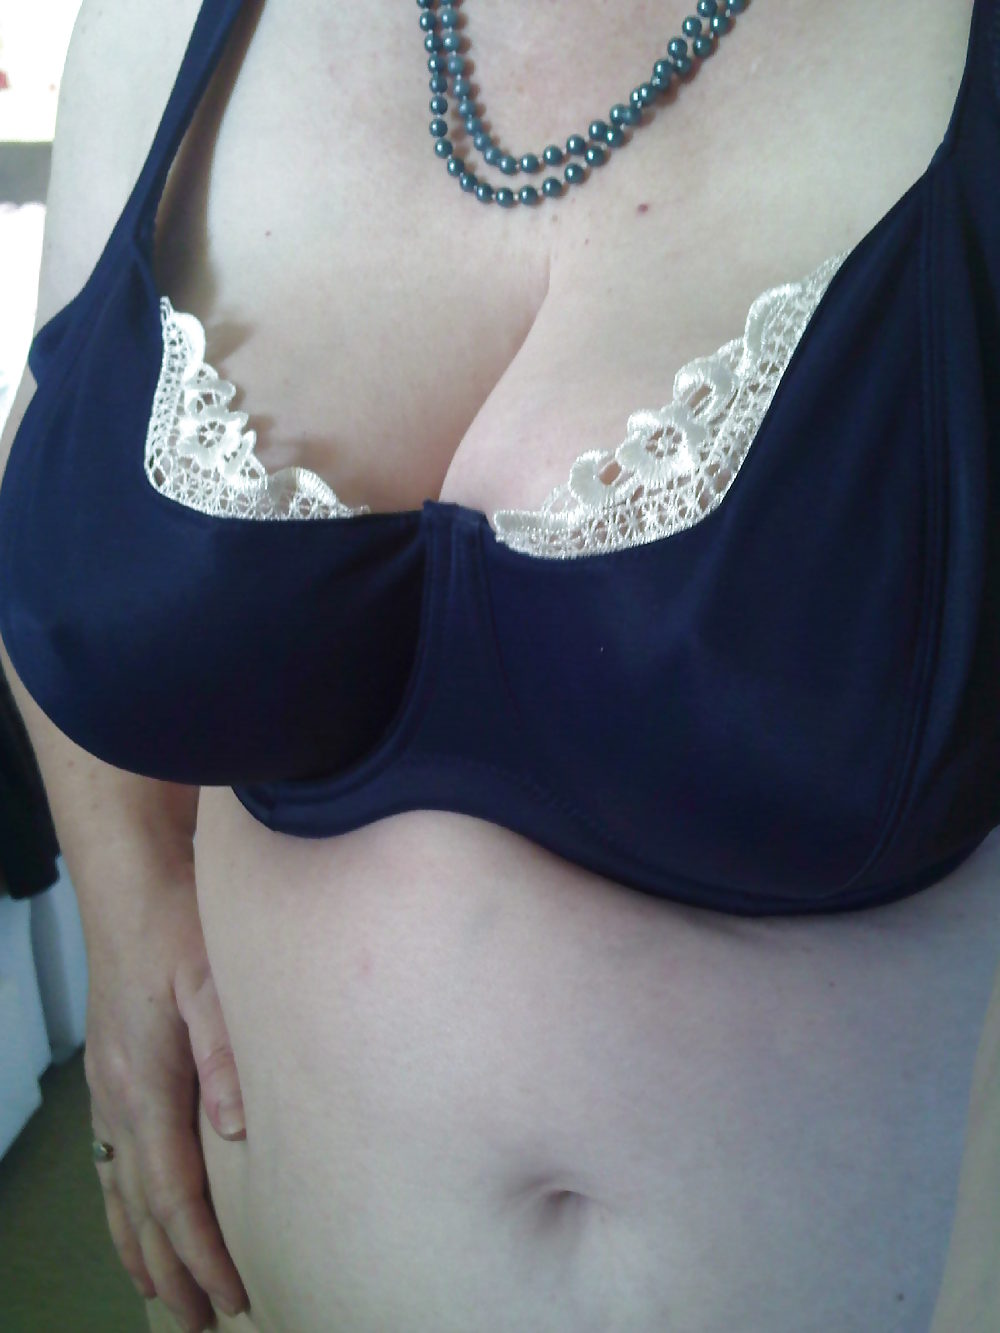 New bra pics